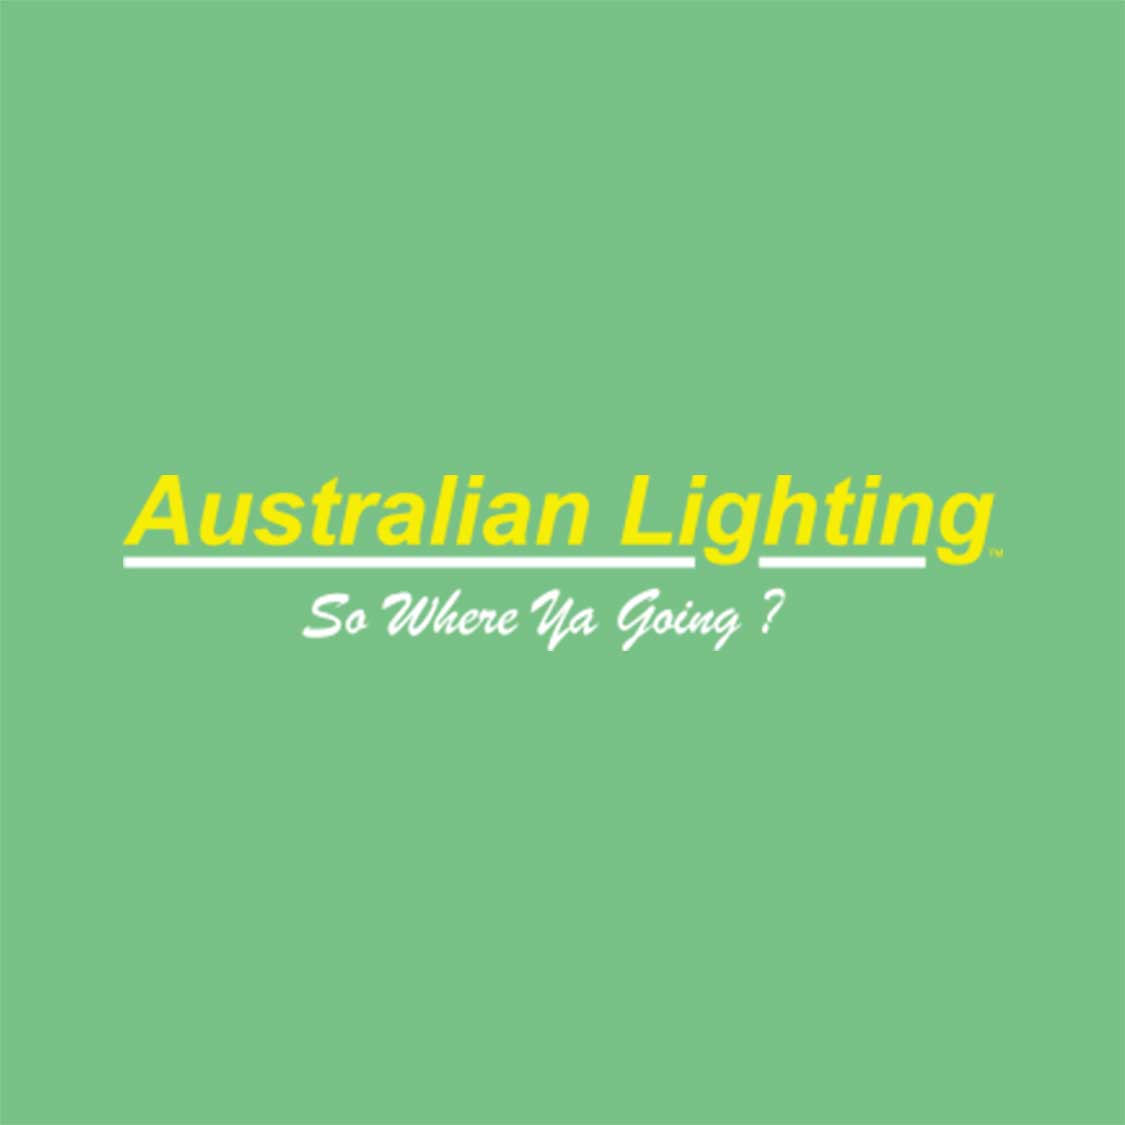 Polar Matt White Ceiling Fan With 18w Cct Dimmable Led Light 56 - Best Dc Ceiling Fans With Light Australia